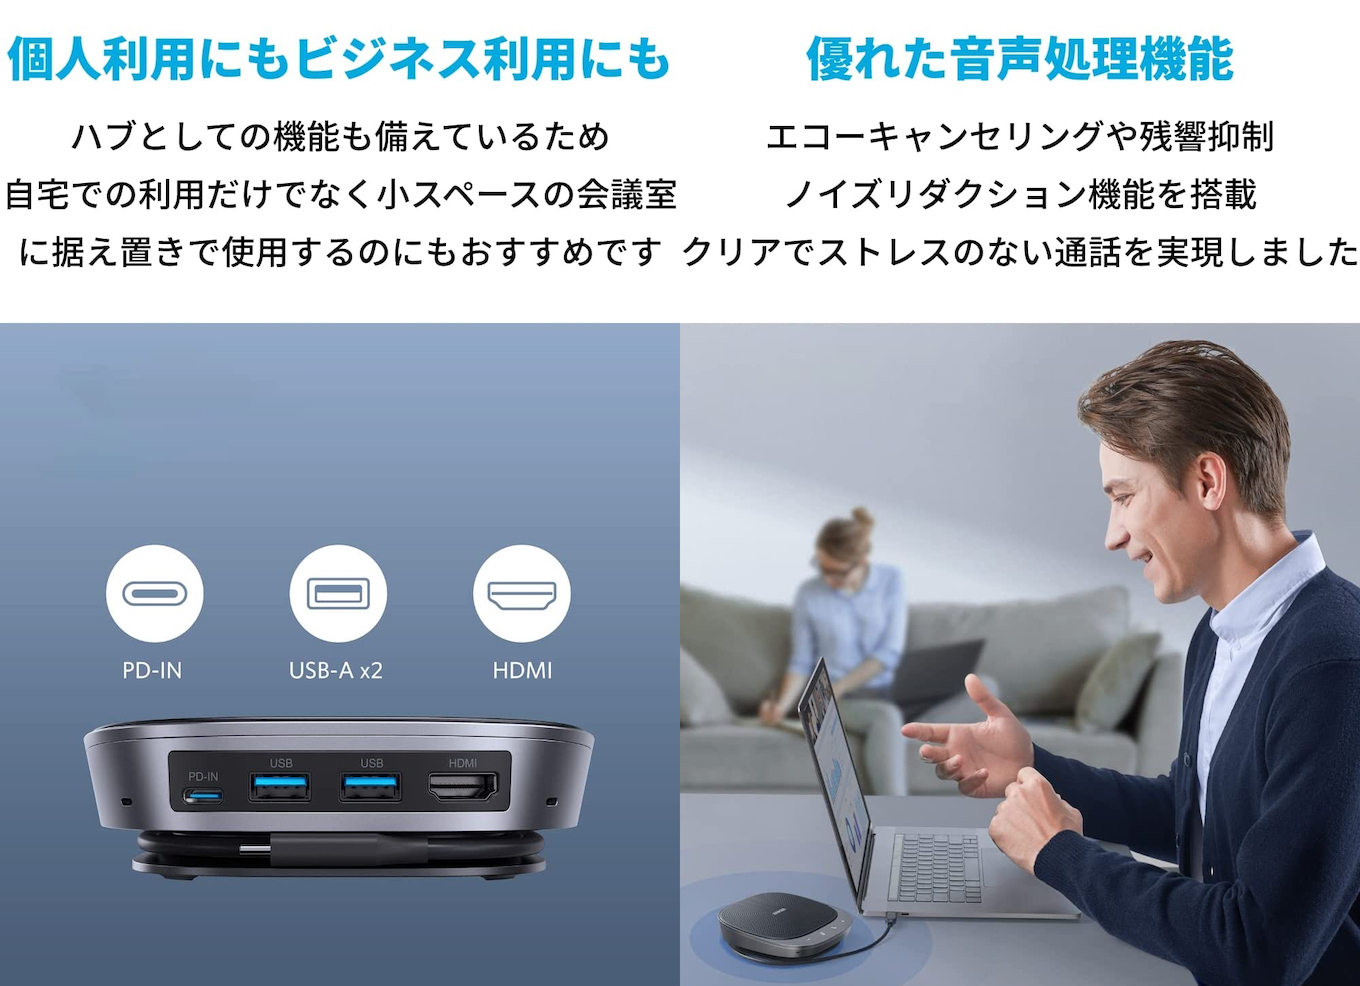 Anker Japan、USB-AやPD-IN、HDMIポートを搭載したUSB-C接続のハブ機能付きスピーカーフォン「Anker PowerConf  S360」を発売。